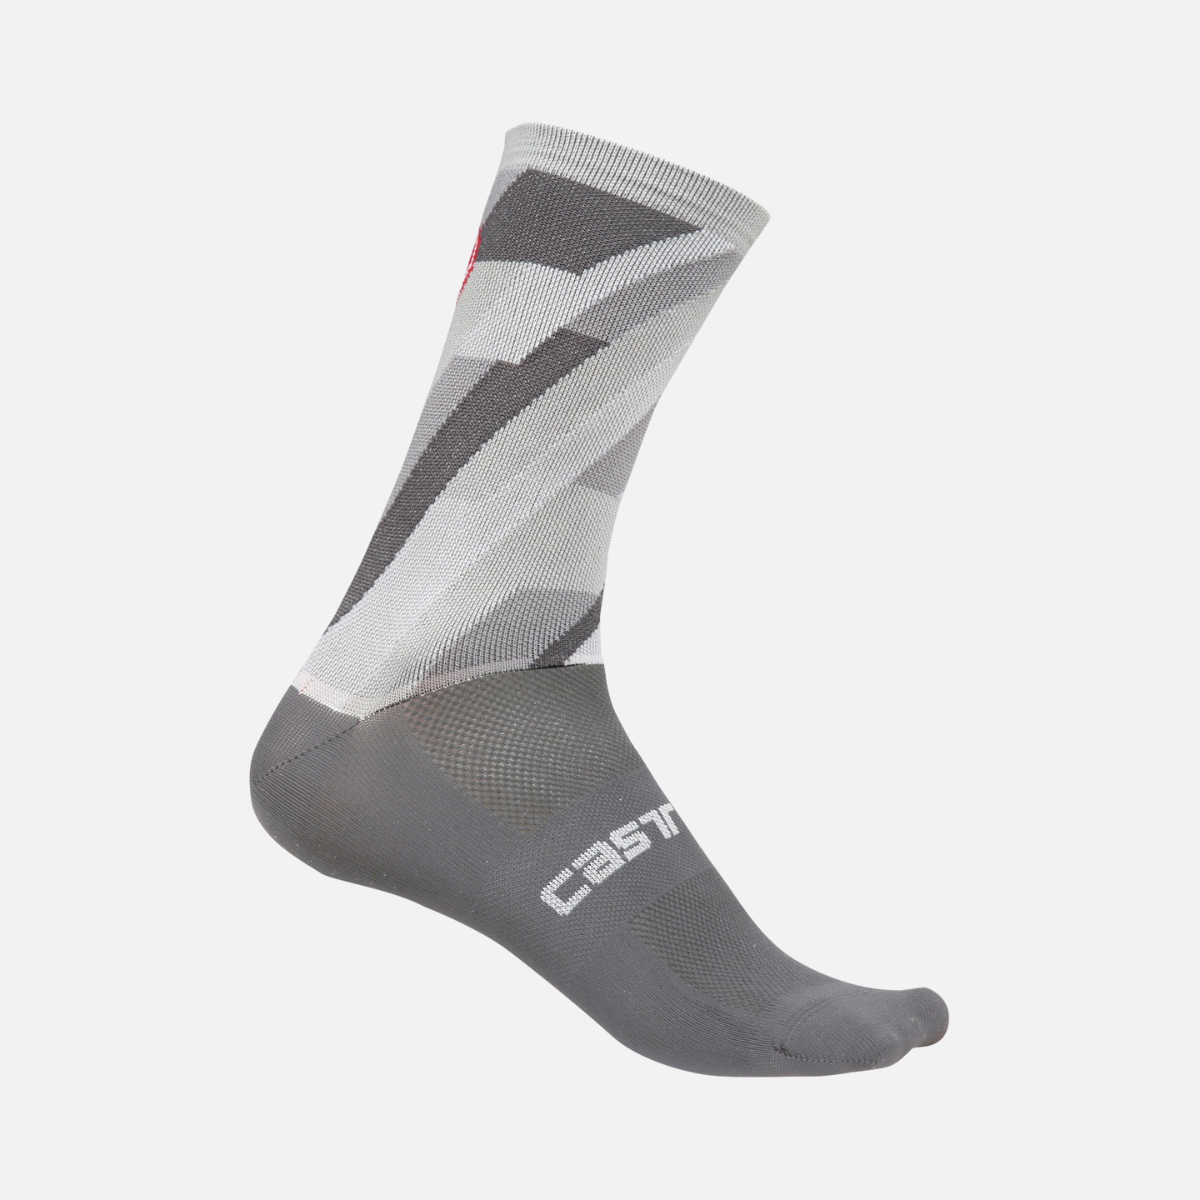 Castelli geo 15 cycling socks -Gray